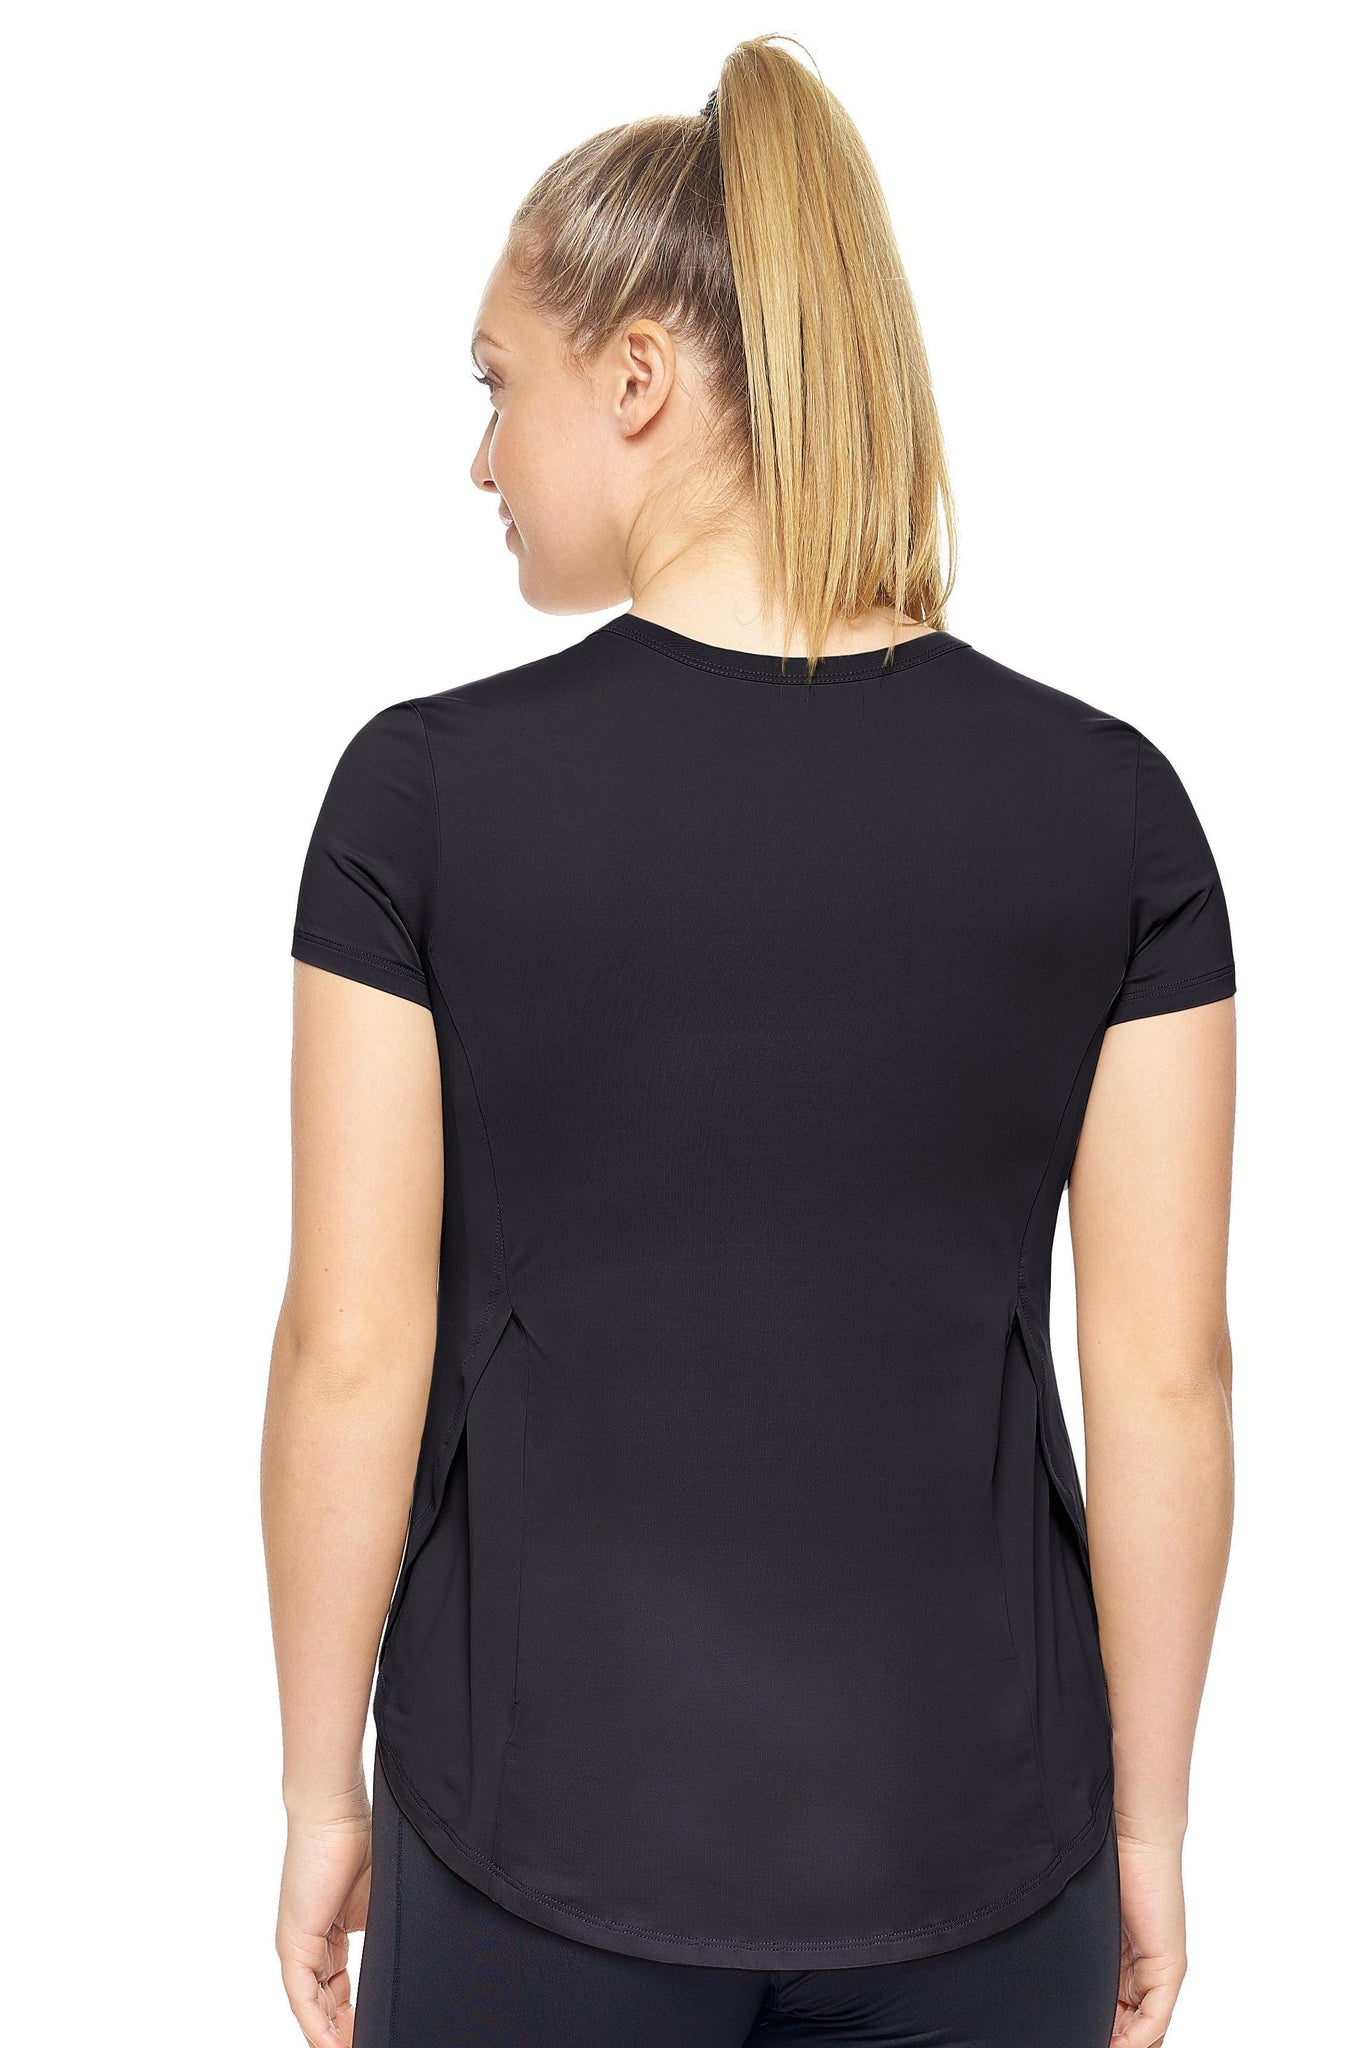 Expert Brand Women's Airstretch™ Lite Breeze Tee in Black Image 3#black